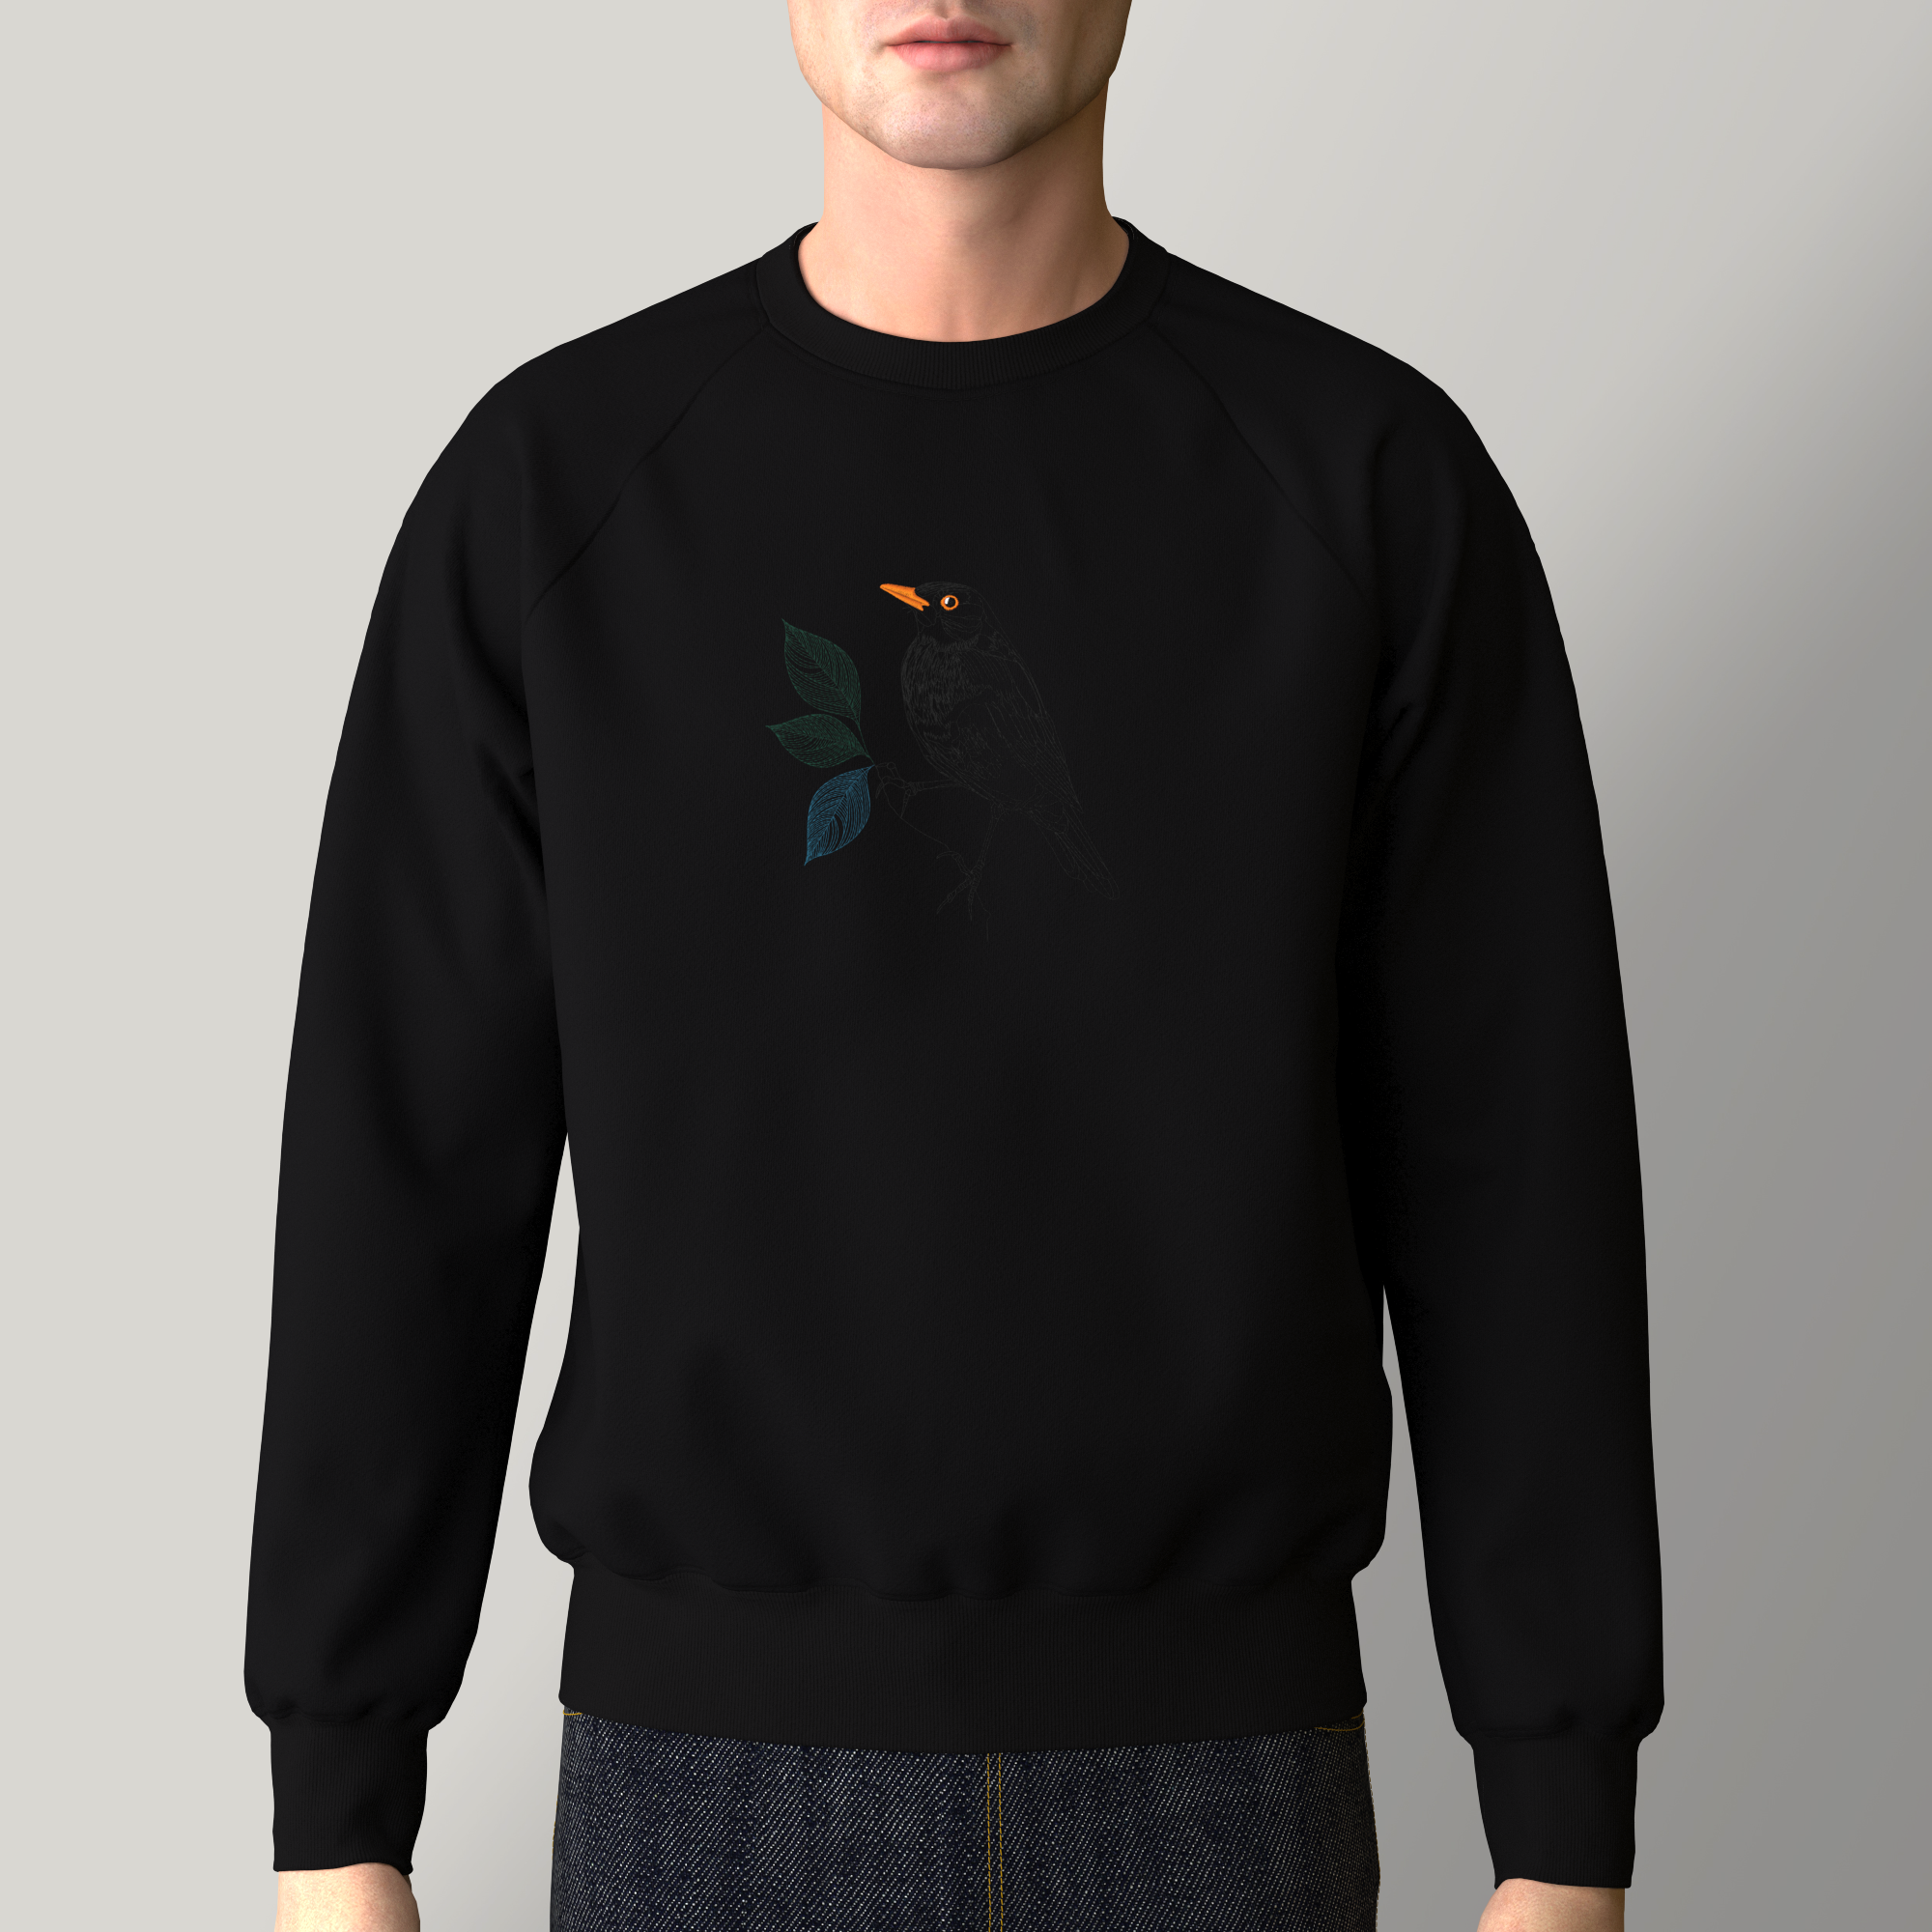 Organic sweatshirt blackbird embroidered made in Paris by